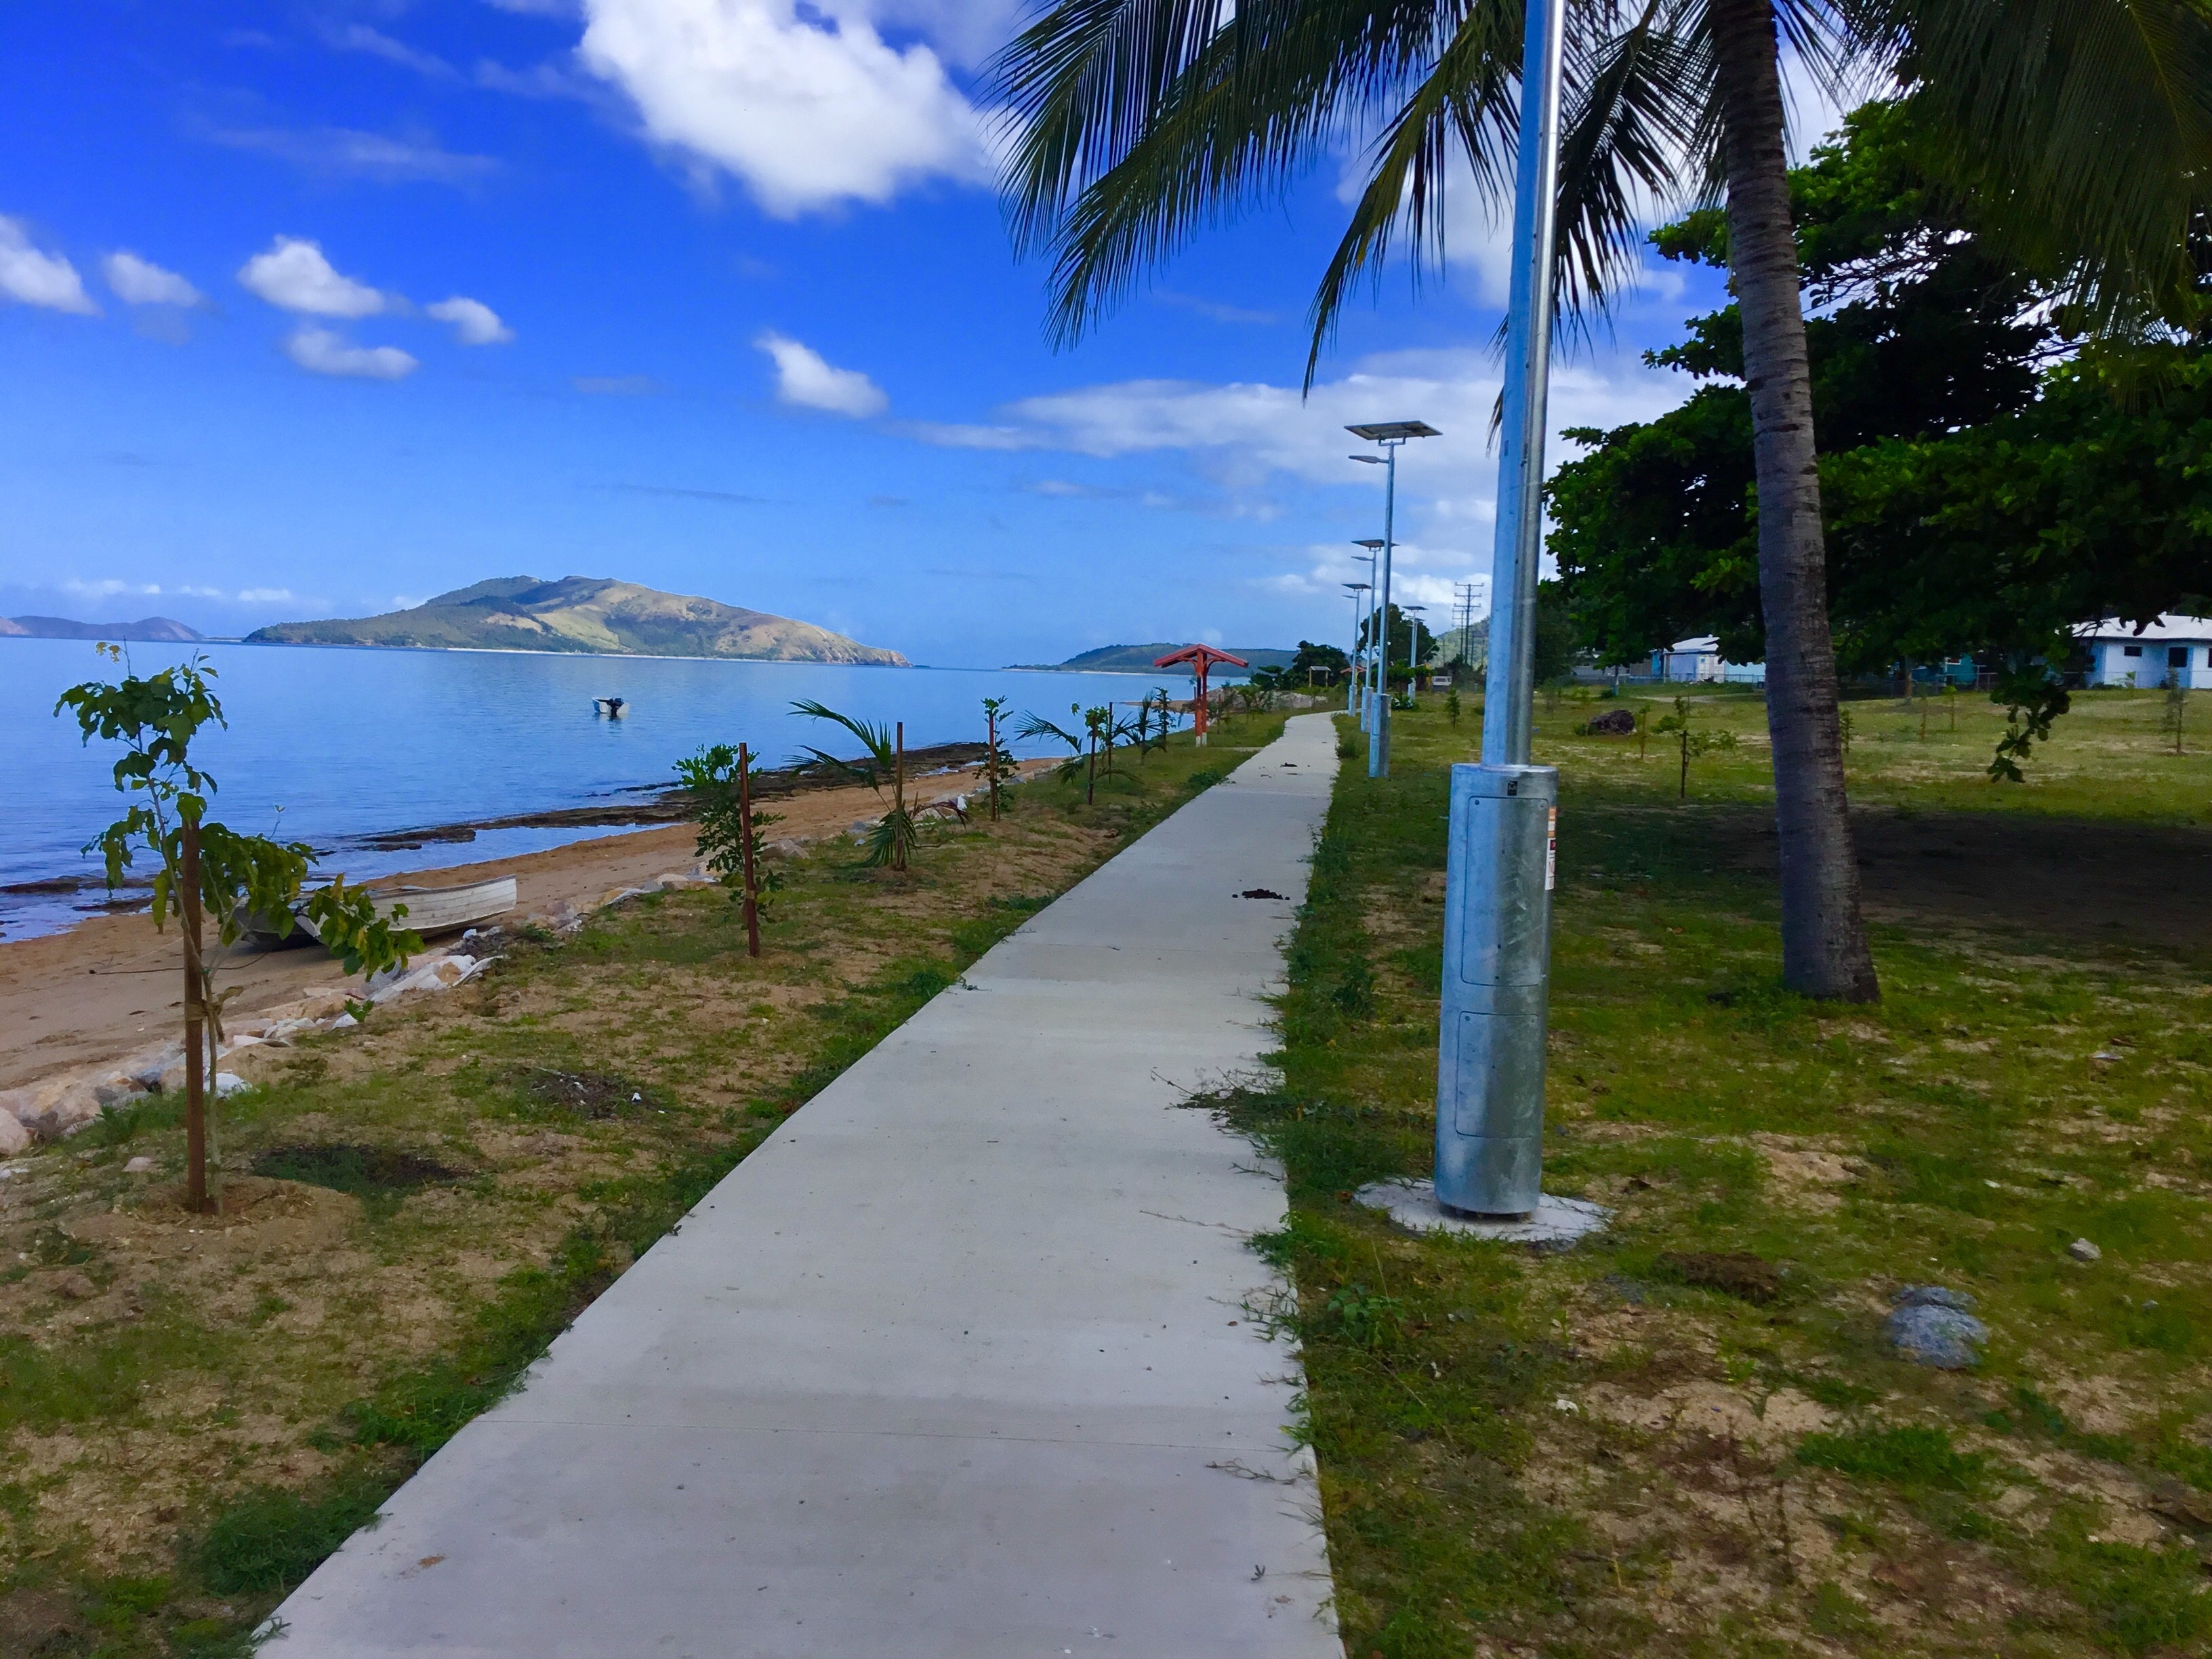 Palm Island Community Development Programme